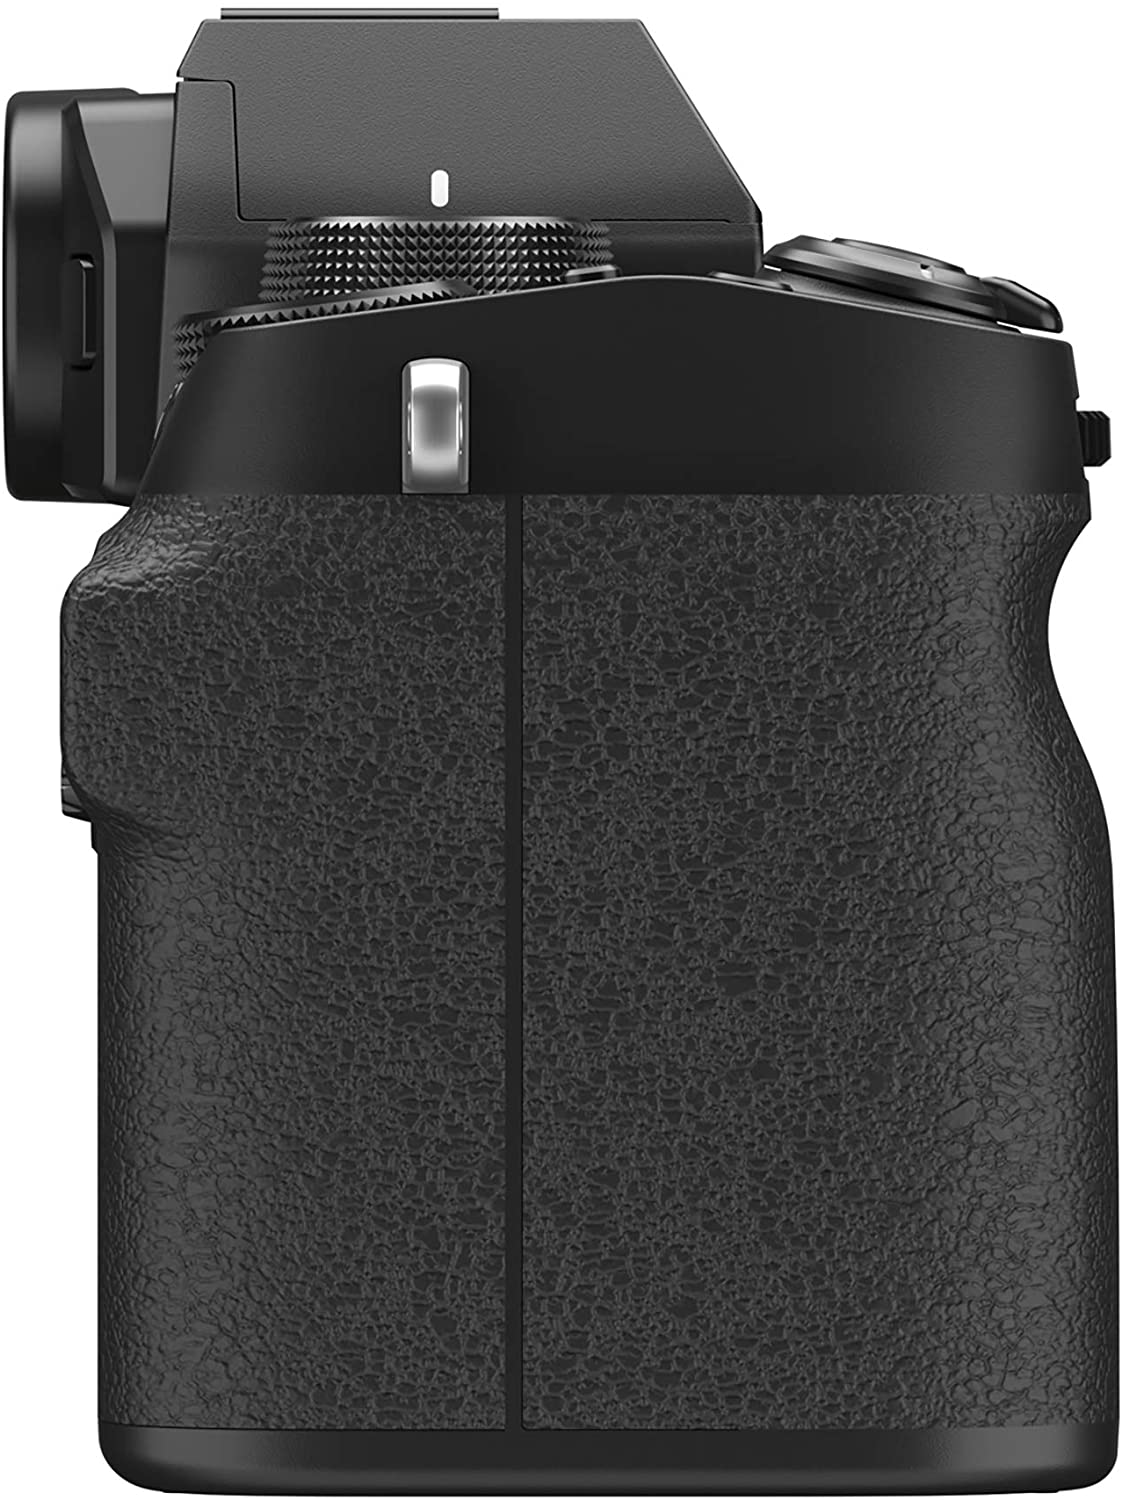 Fujifilm X-S10 Mirrorless Camera Body- Black